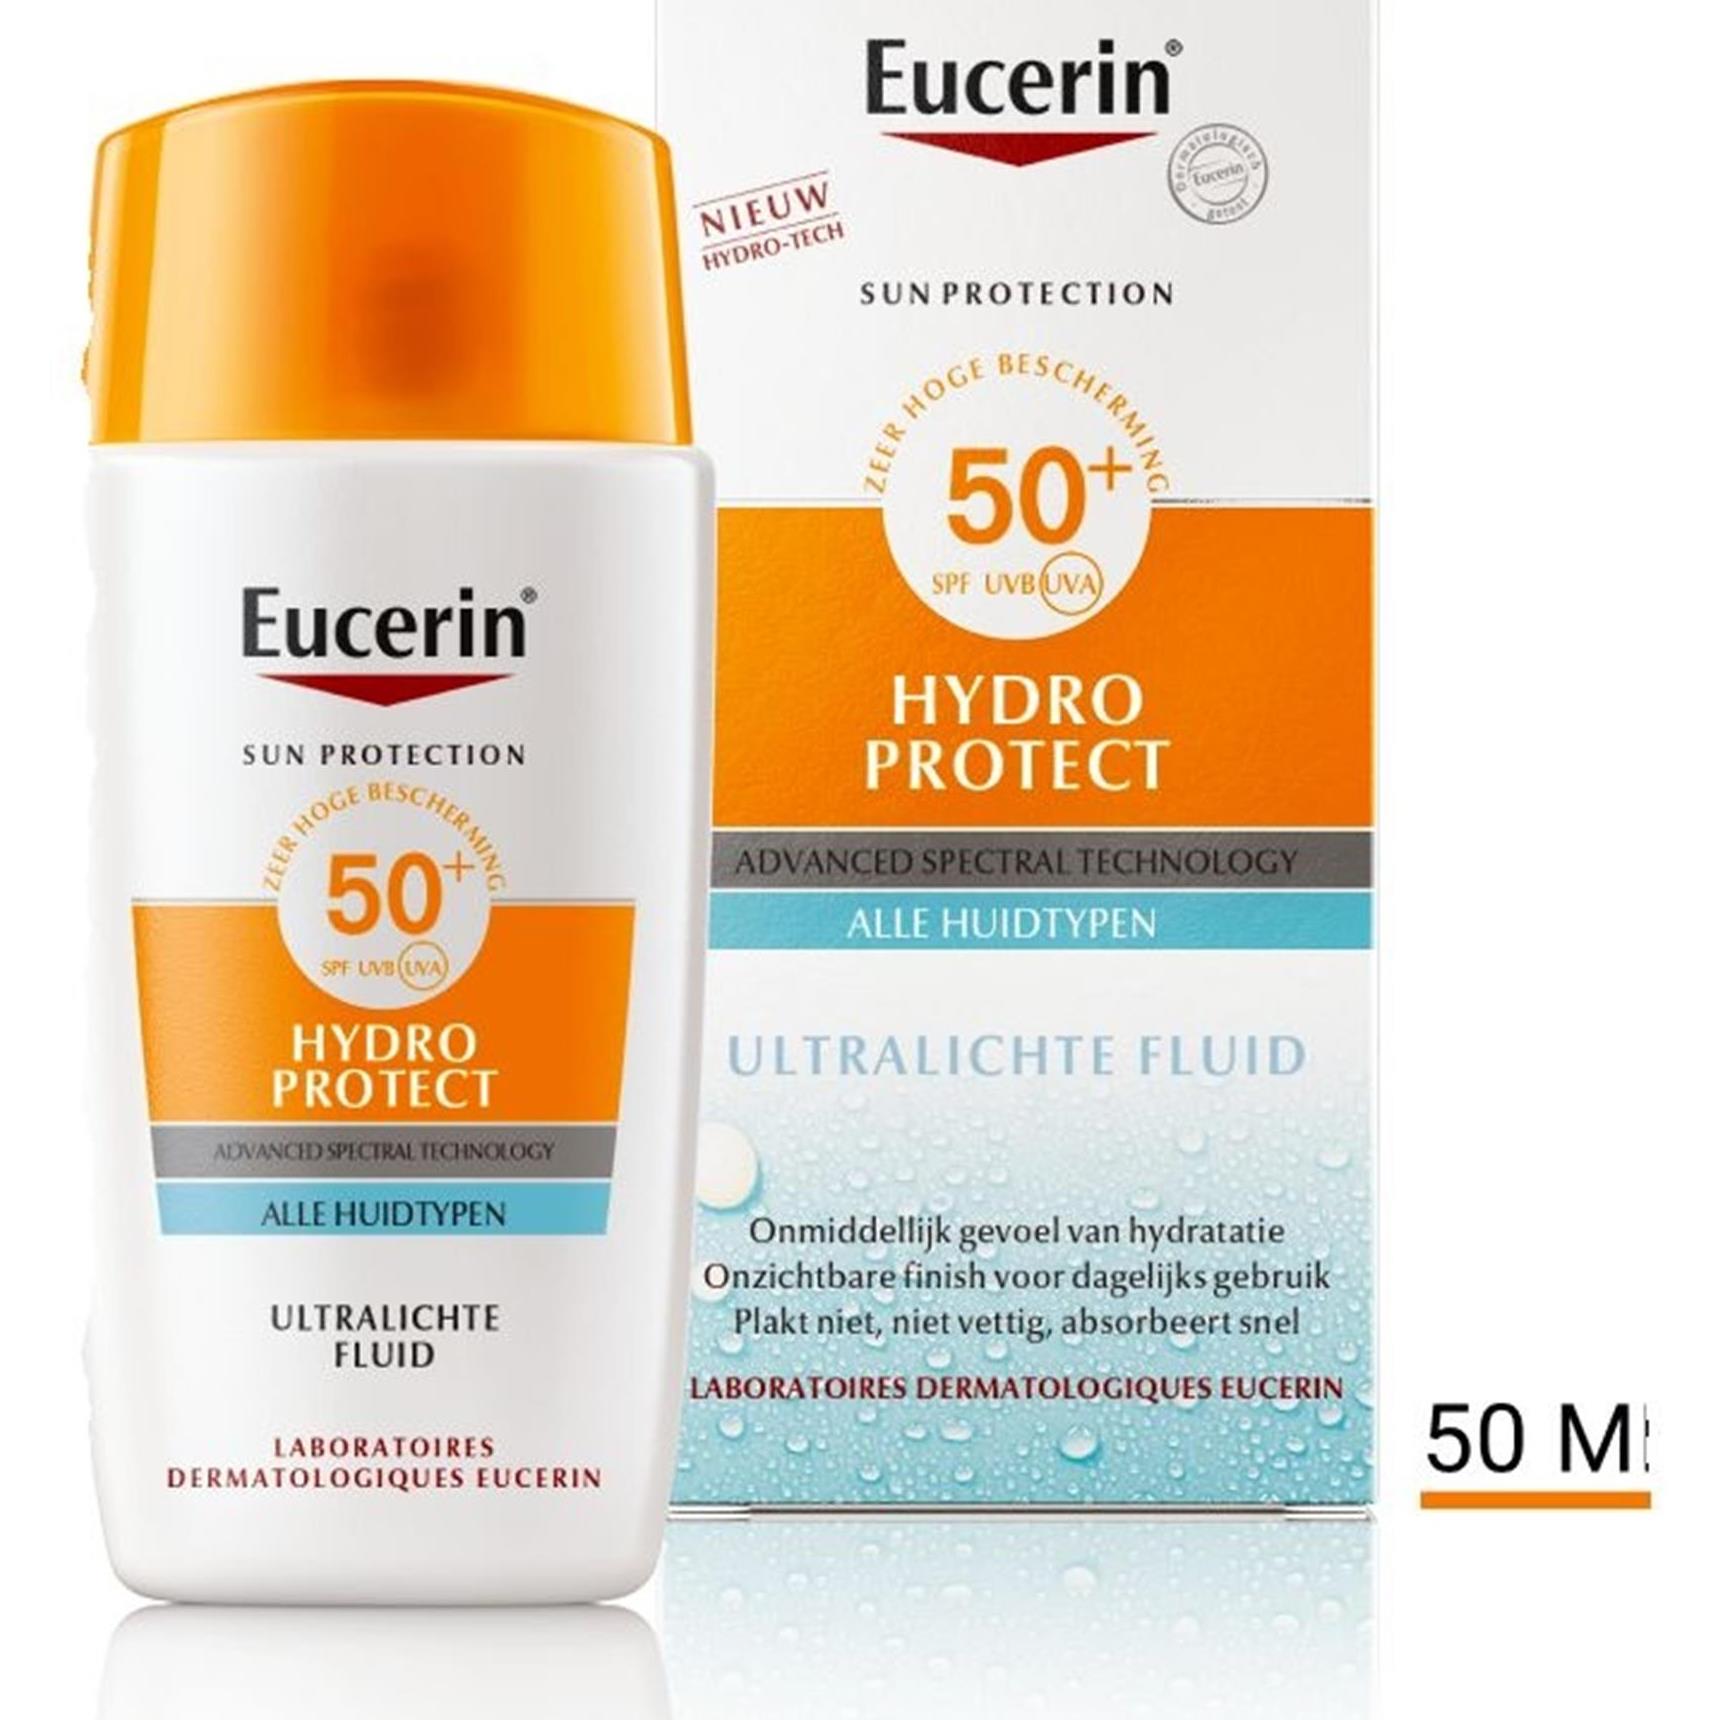 EUCERIN - FLUIDE ULTRA LEGER [HYDRO PROTECT 50+] [50 ML]